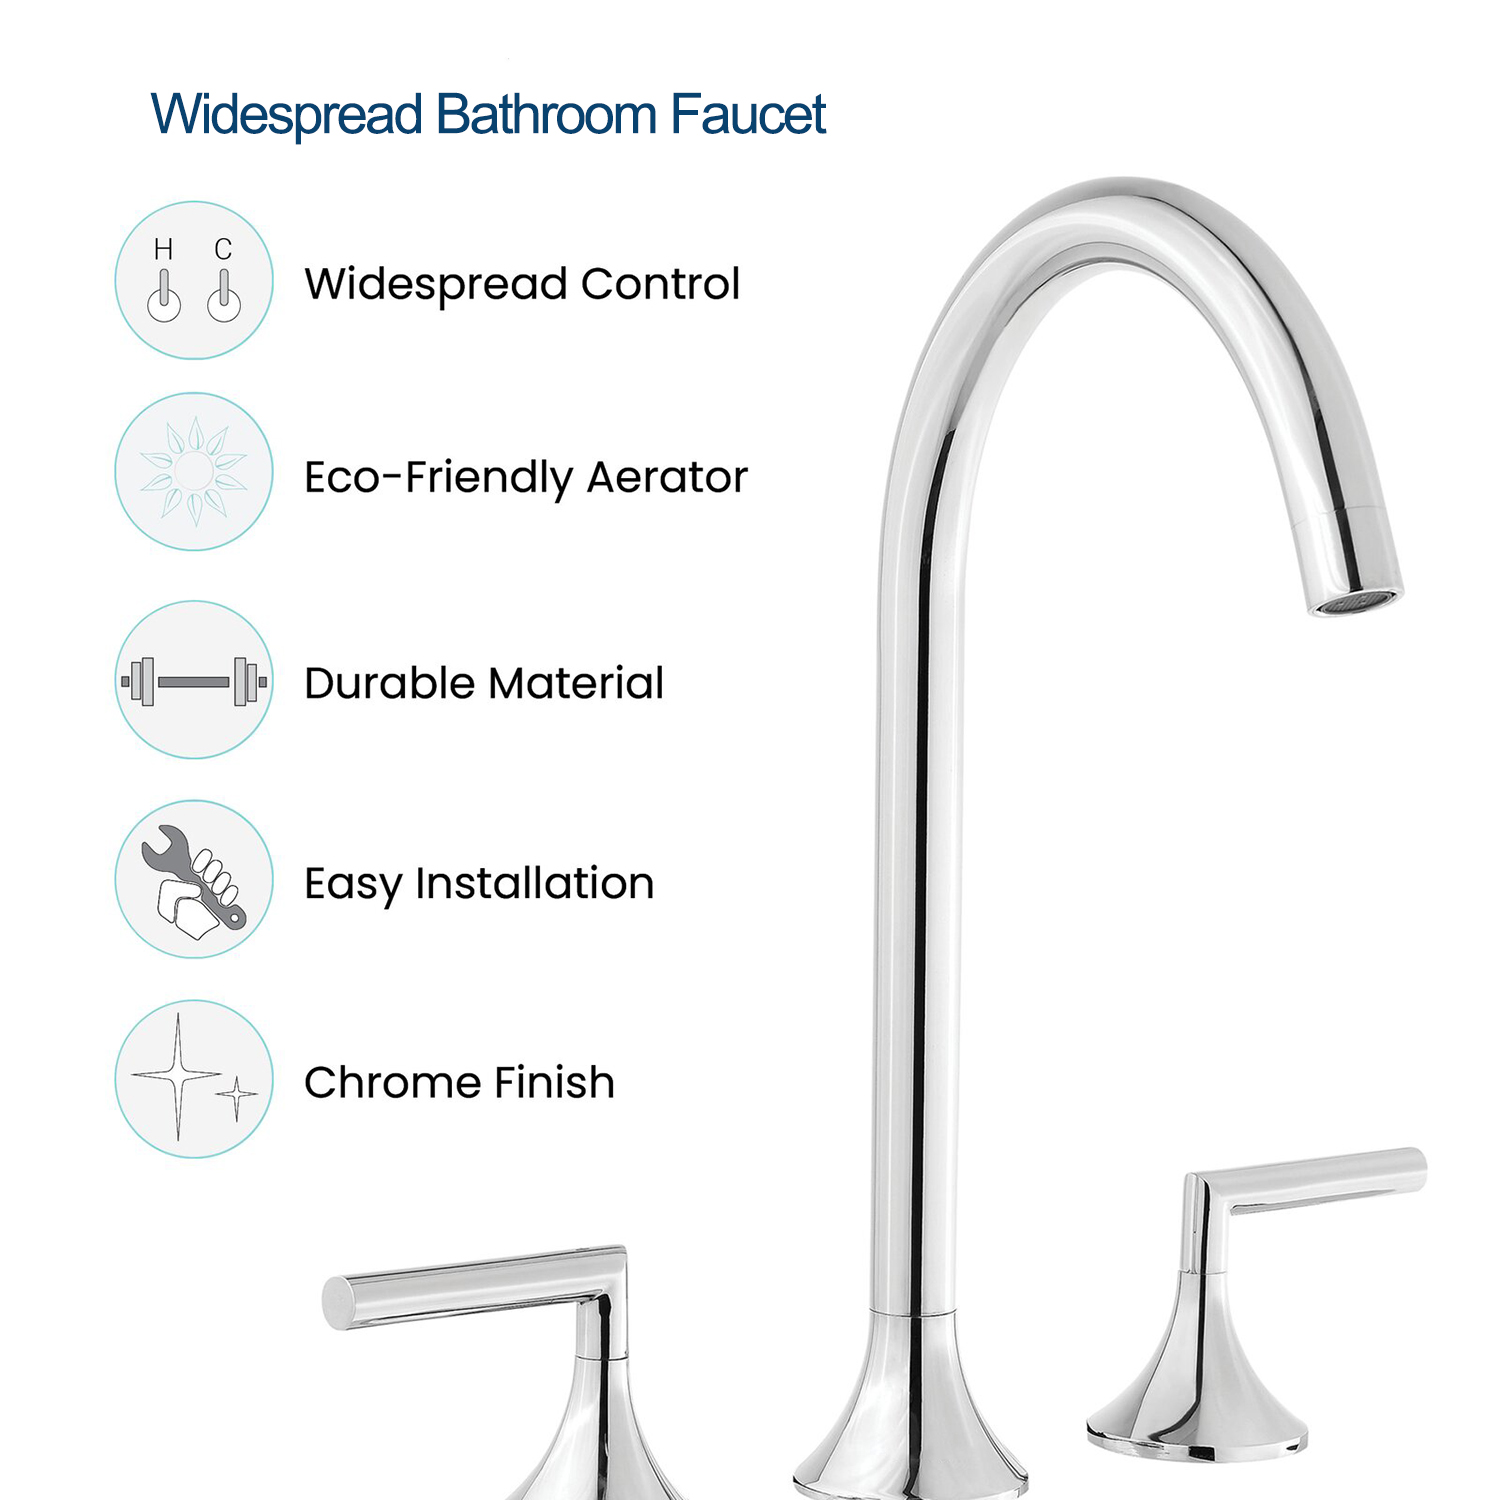 Aquacubic Chrome Commercial Bathroom Two Handle Widespread Lavatory Deck Mount Basin Mixer Tap Faucet